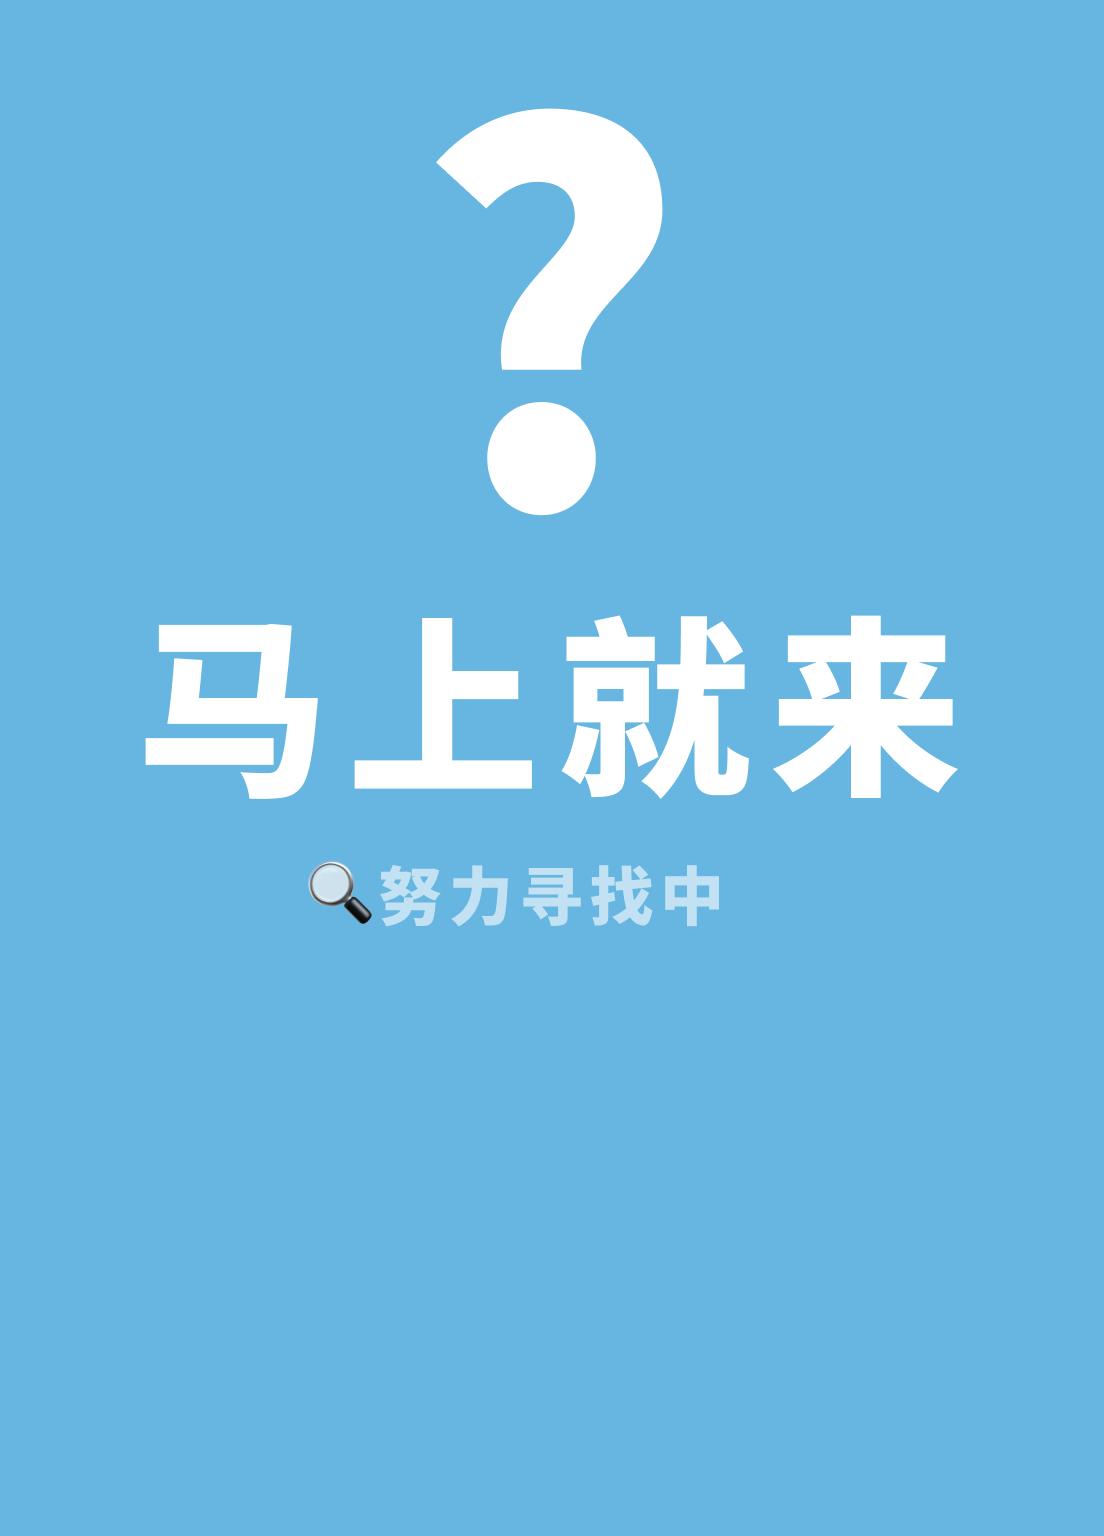 The event cover of 生日特别篇